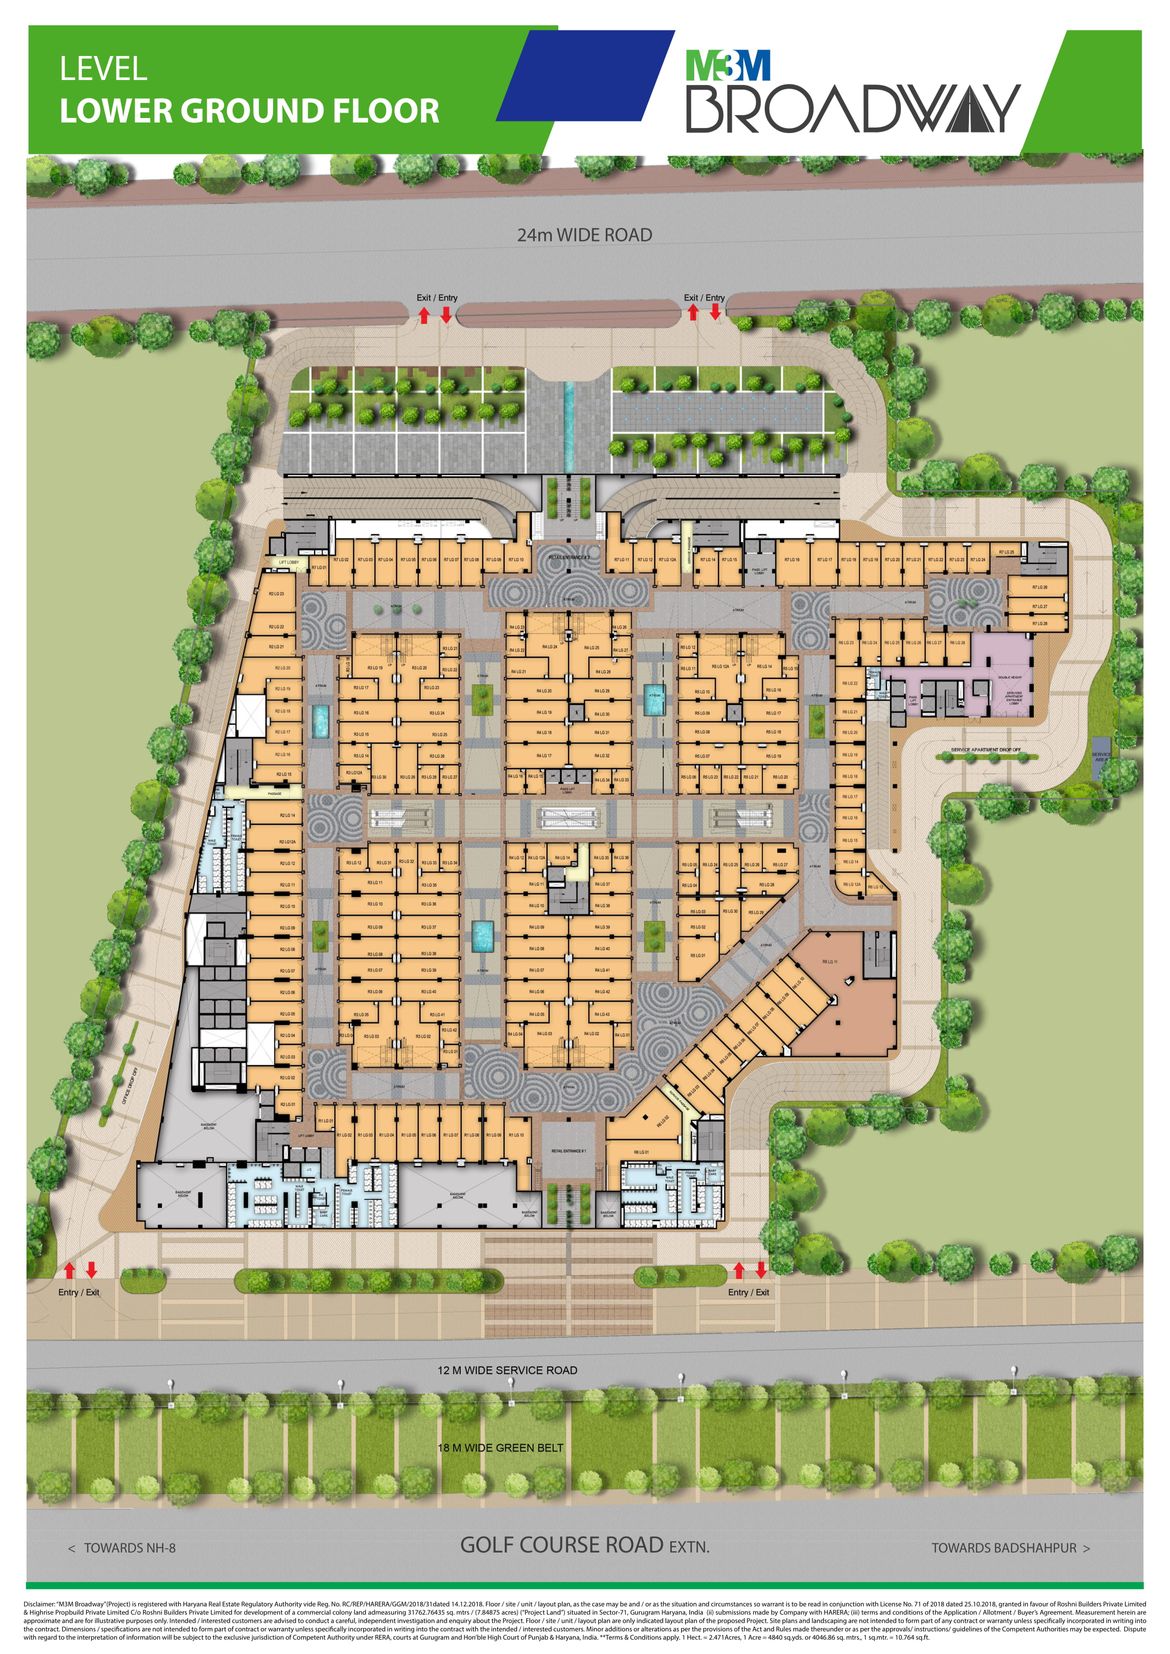 M3M Broadway Gurgaon floorplan